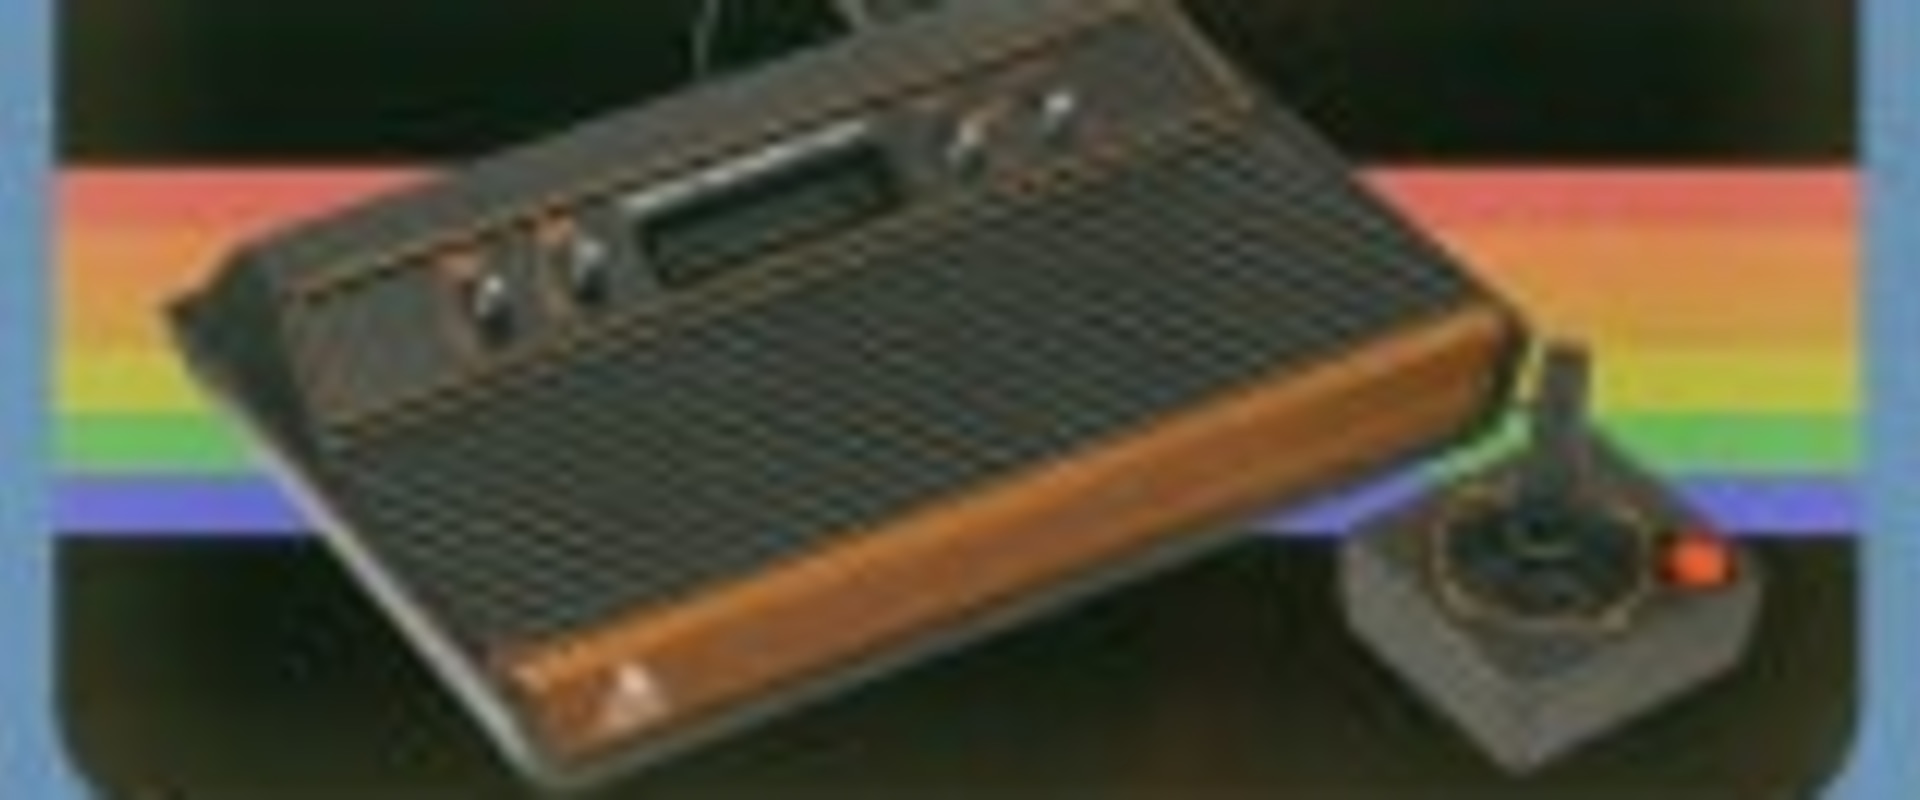 Atari 2600: A Look at the Classic Gaming System